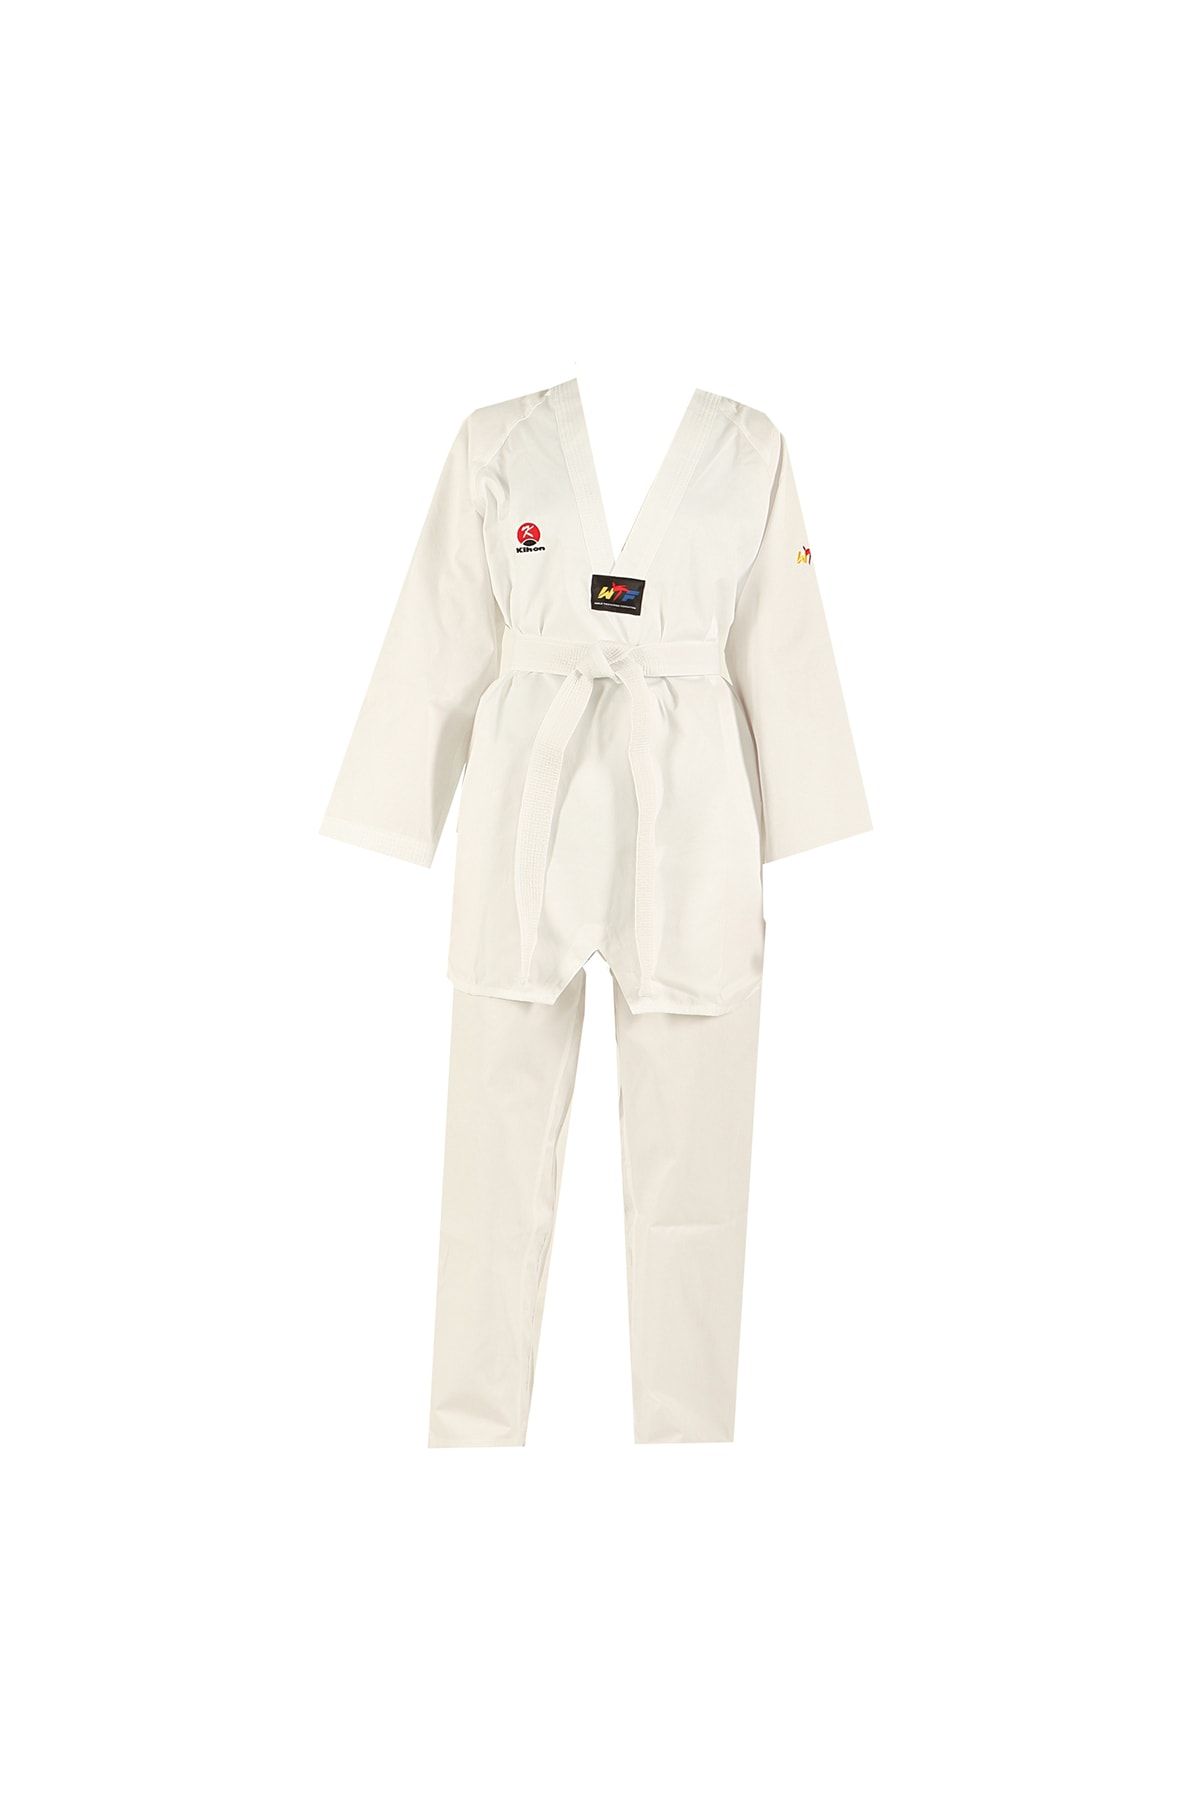 Kihon Taekwondo Beyaz Yaka Elbise